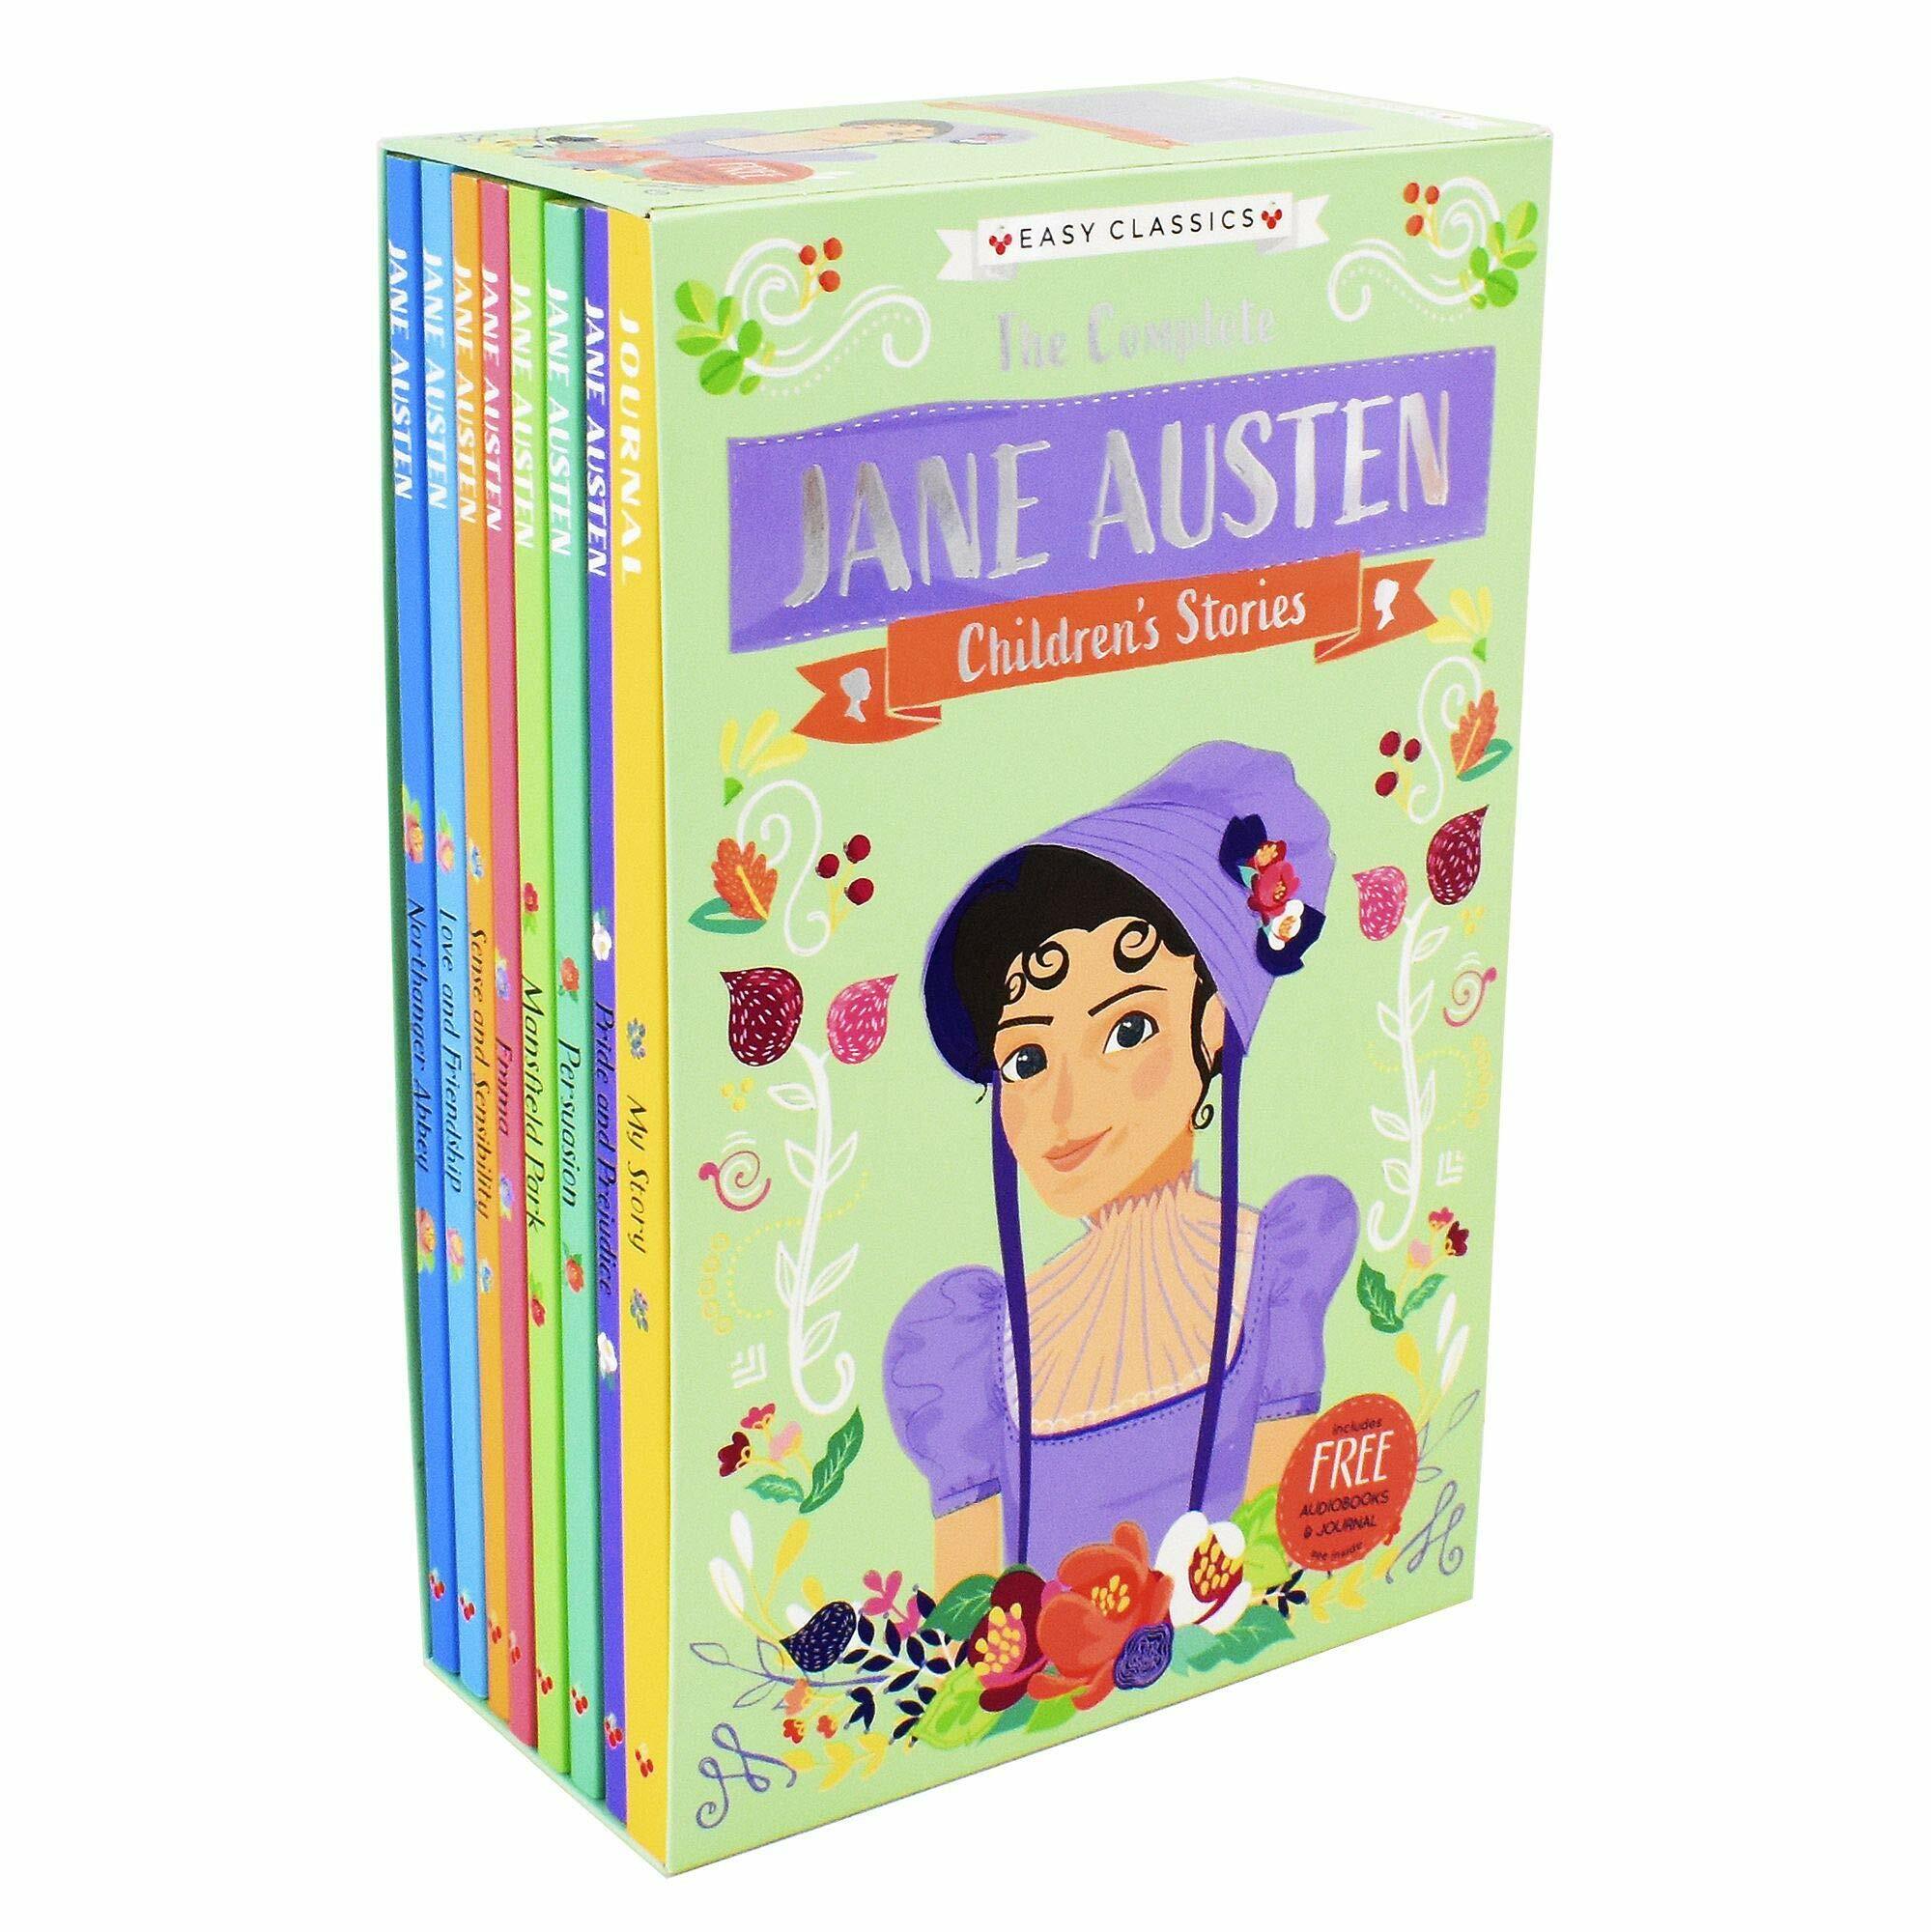 Jane Austen Childrens Stories: 8 Book Box Set (Easy Classics) (Boxed pack)